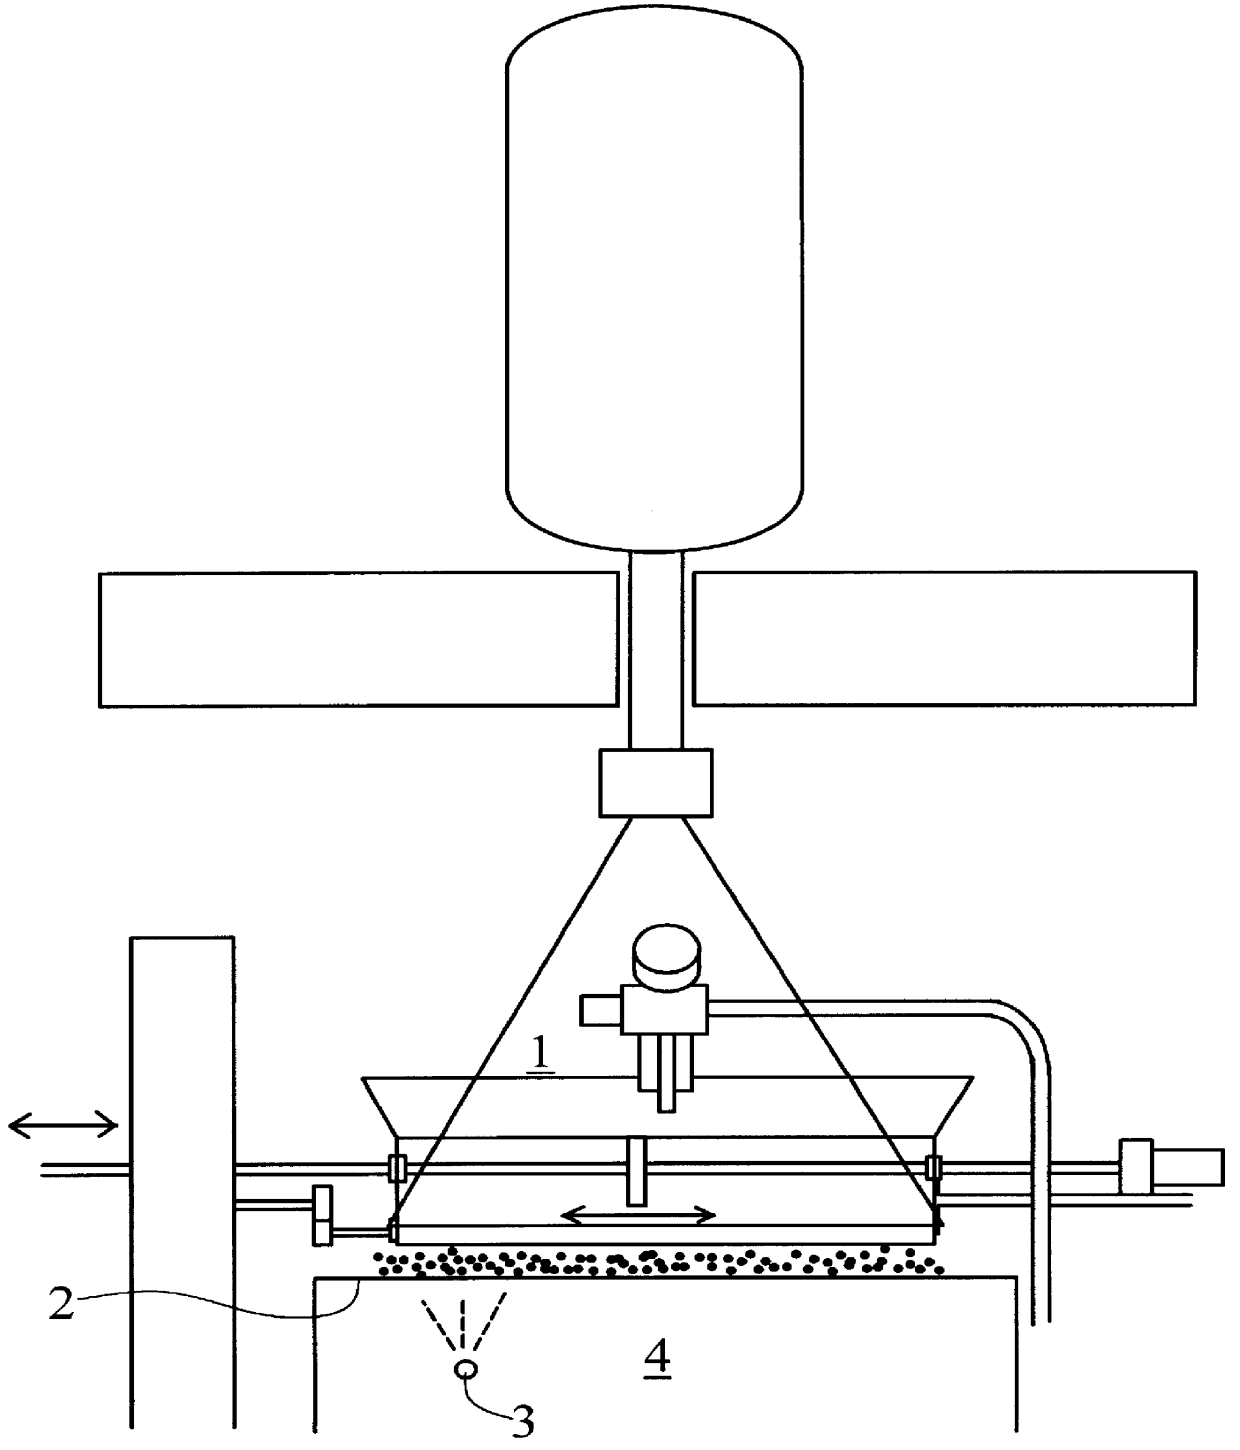 Radiation processing apparatus and method